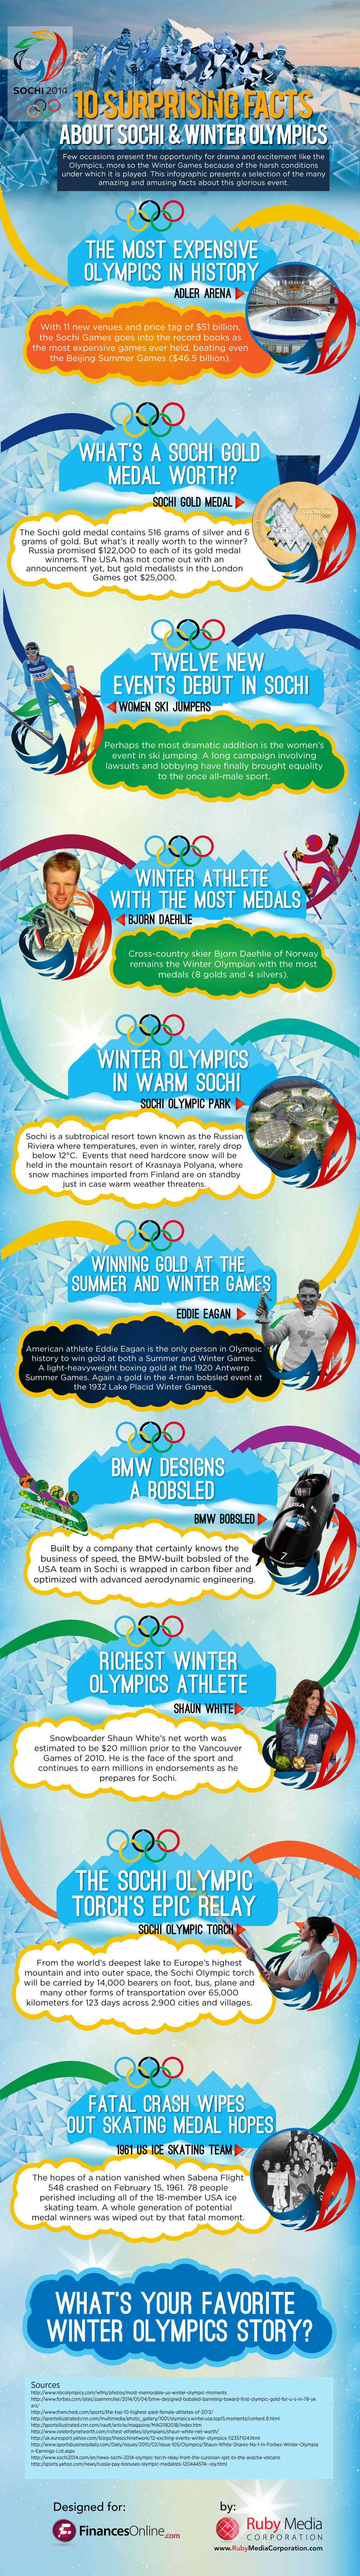 Russian Winter Olympics Sports